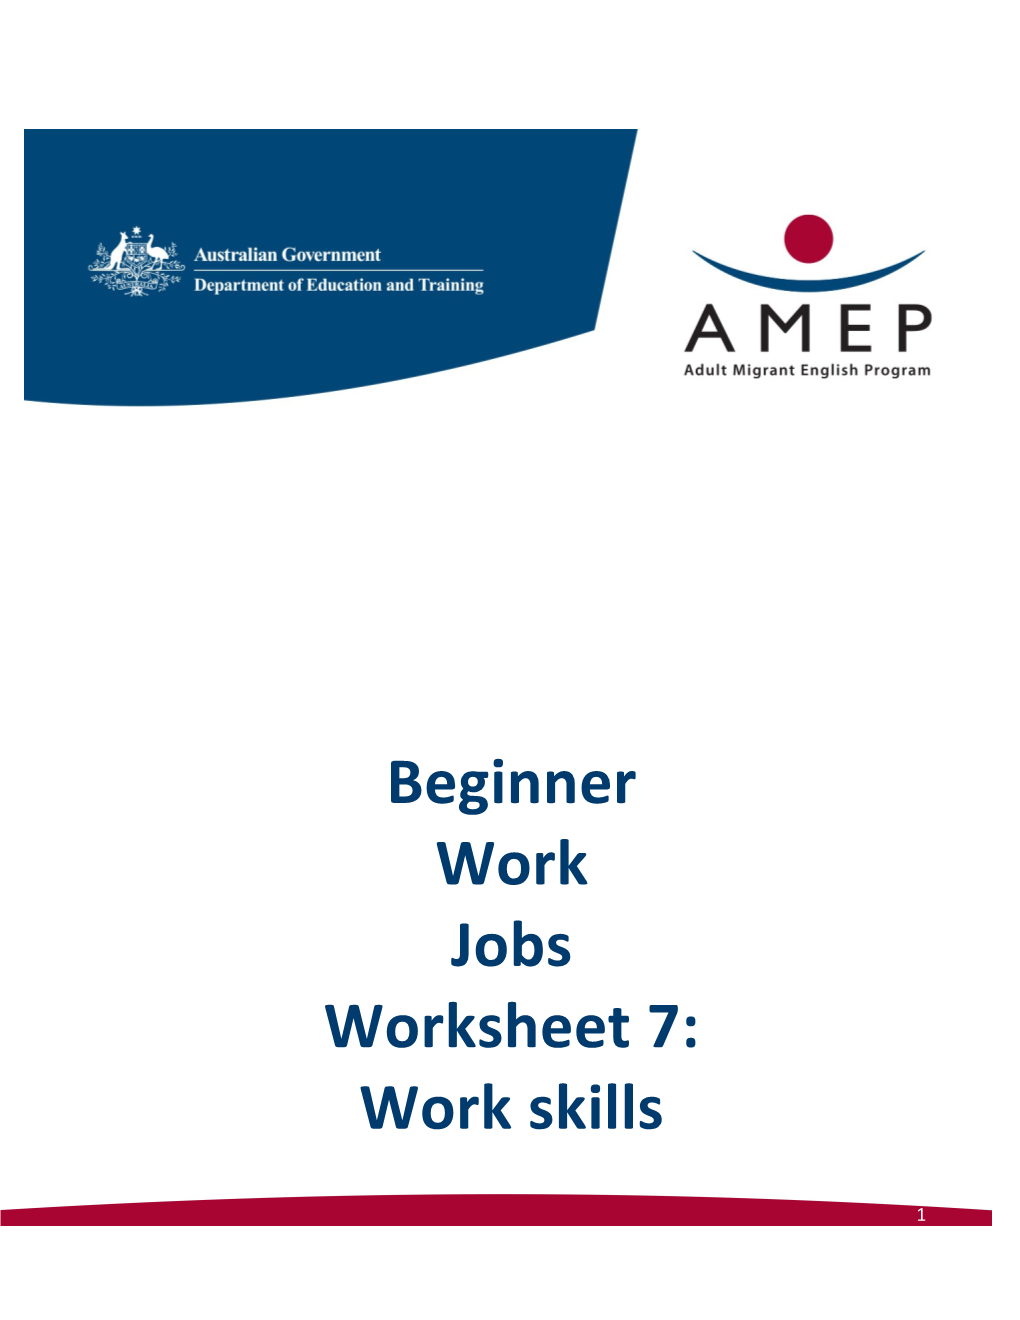 Beginner Work Jobs Worksheet 7: Work Skills